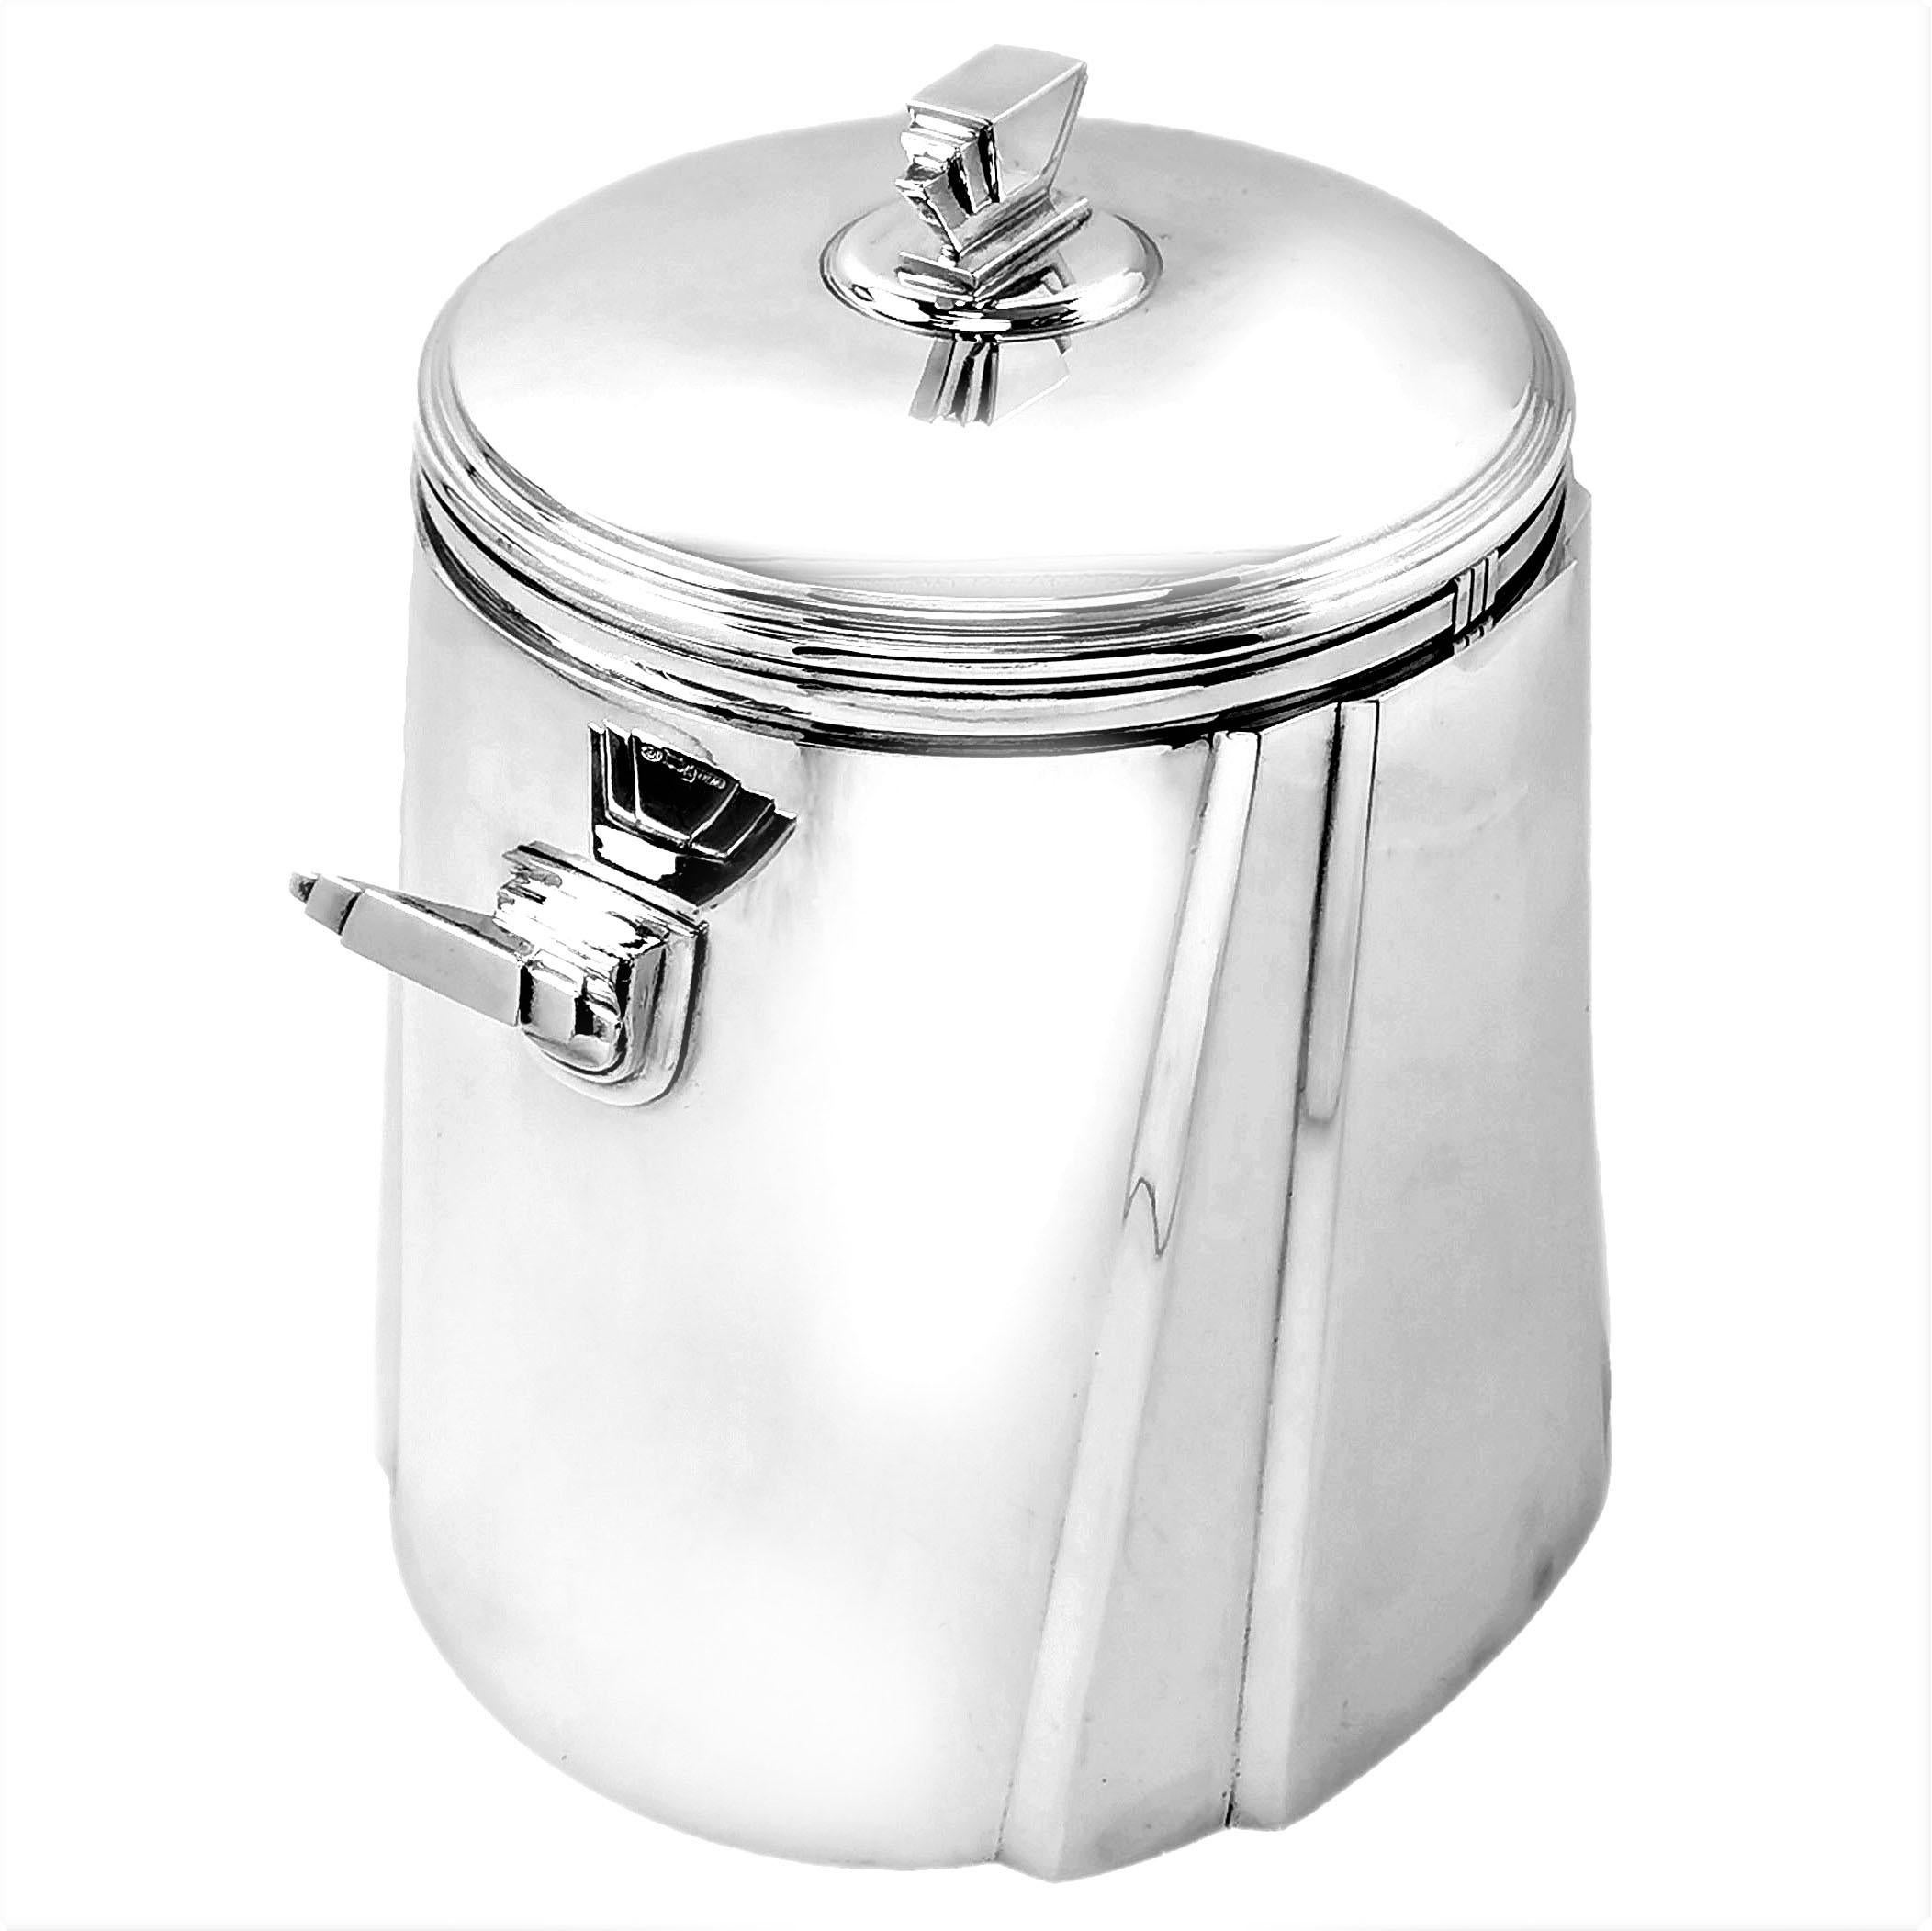 20th Century Italian Solid Silver Ice Bucket Champagne Cooler circa 1950 Art Deco Style